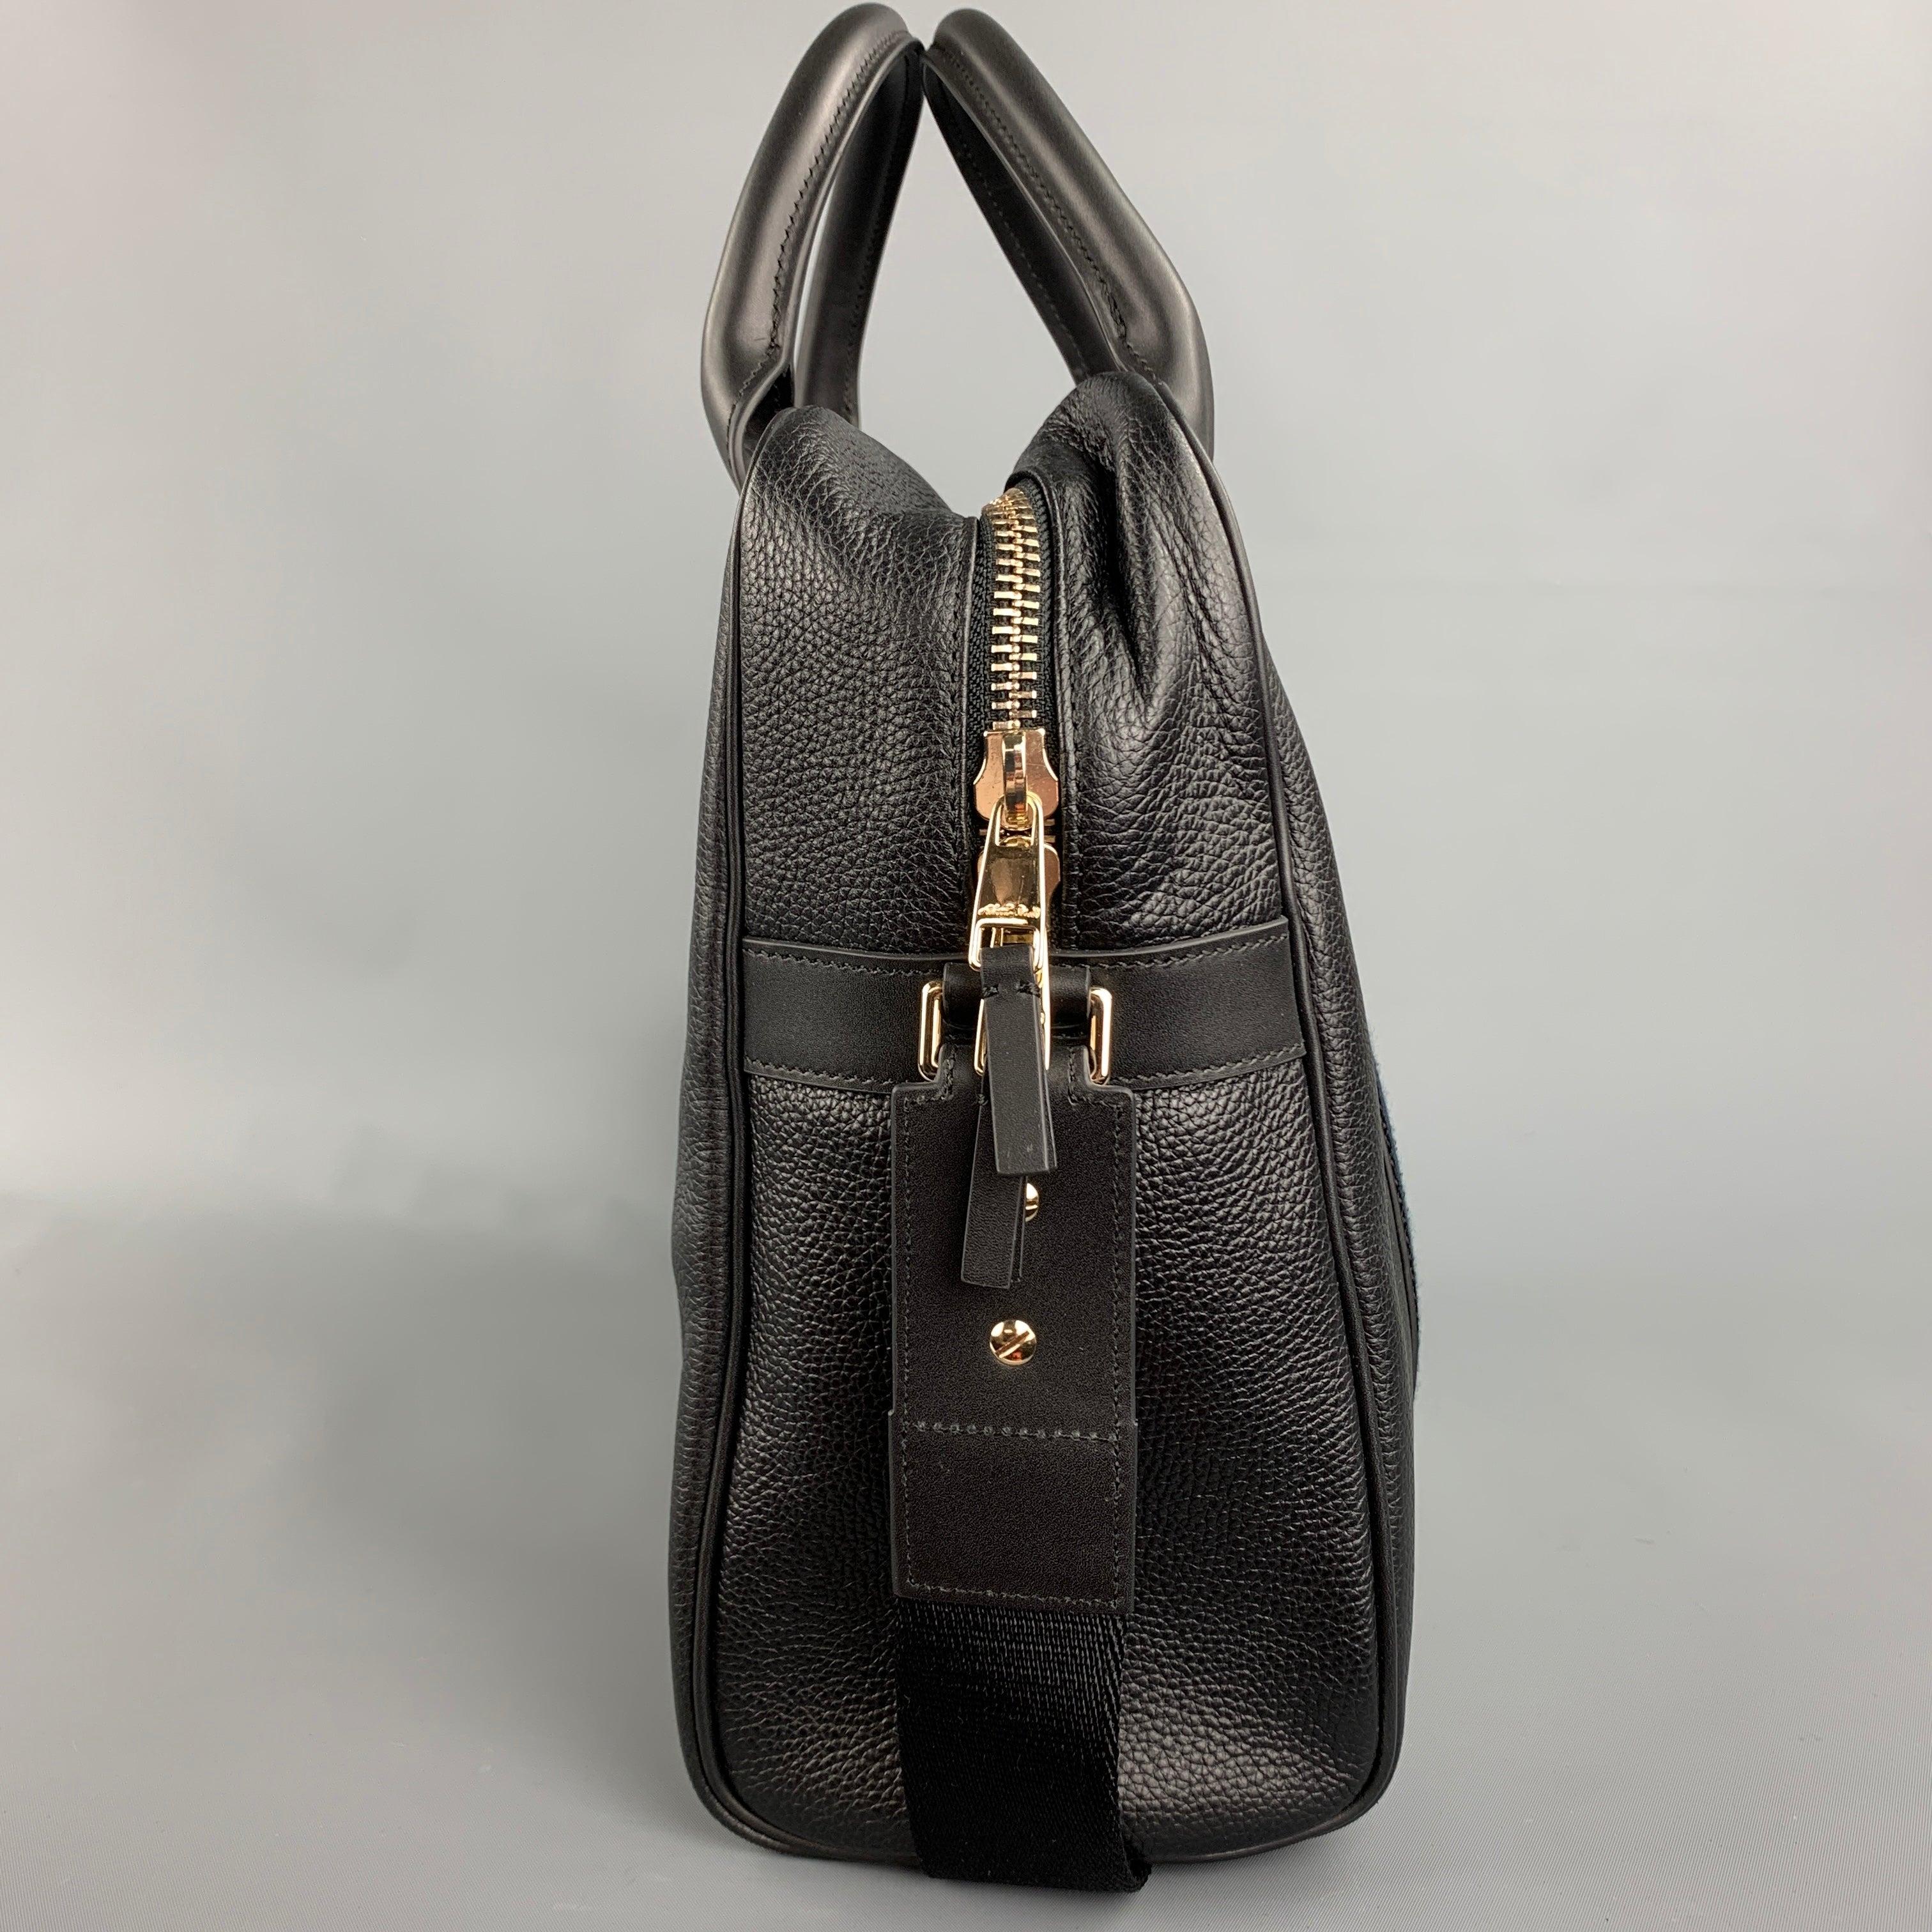 PAUL SMITH Black Pebble Grain Leather Briefcase Bag For Sale 1